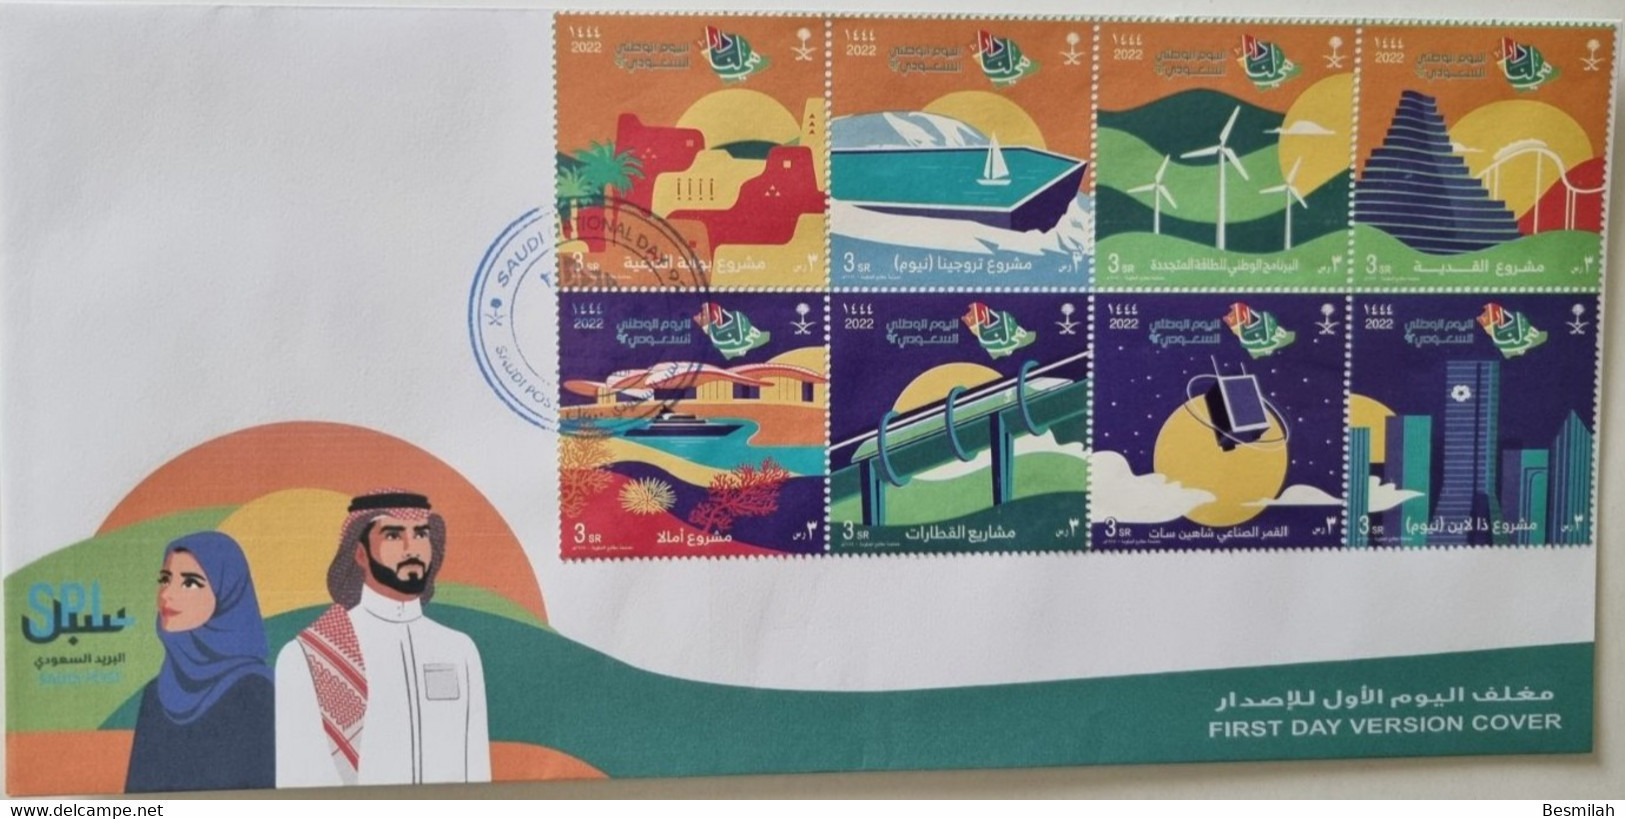 Saudi Arabia Stamp 92 National Day 2022 (1444 Hijry) 16 Pieces Of 3 Riyals + Card + Post Card Plus FDVC For Both - Arabia Saudita